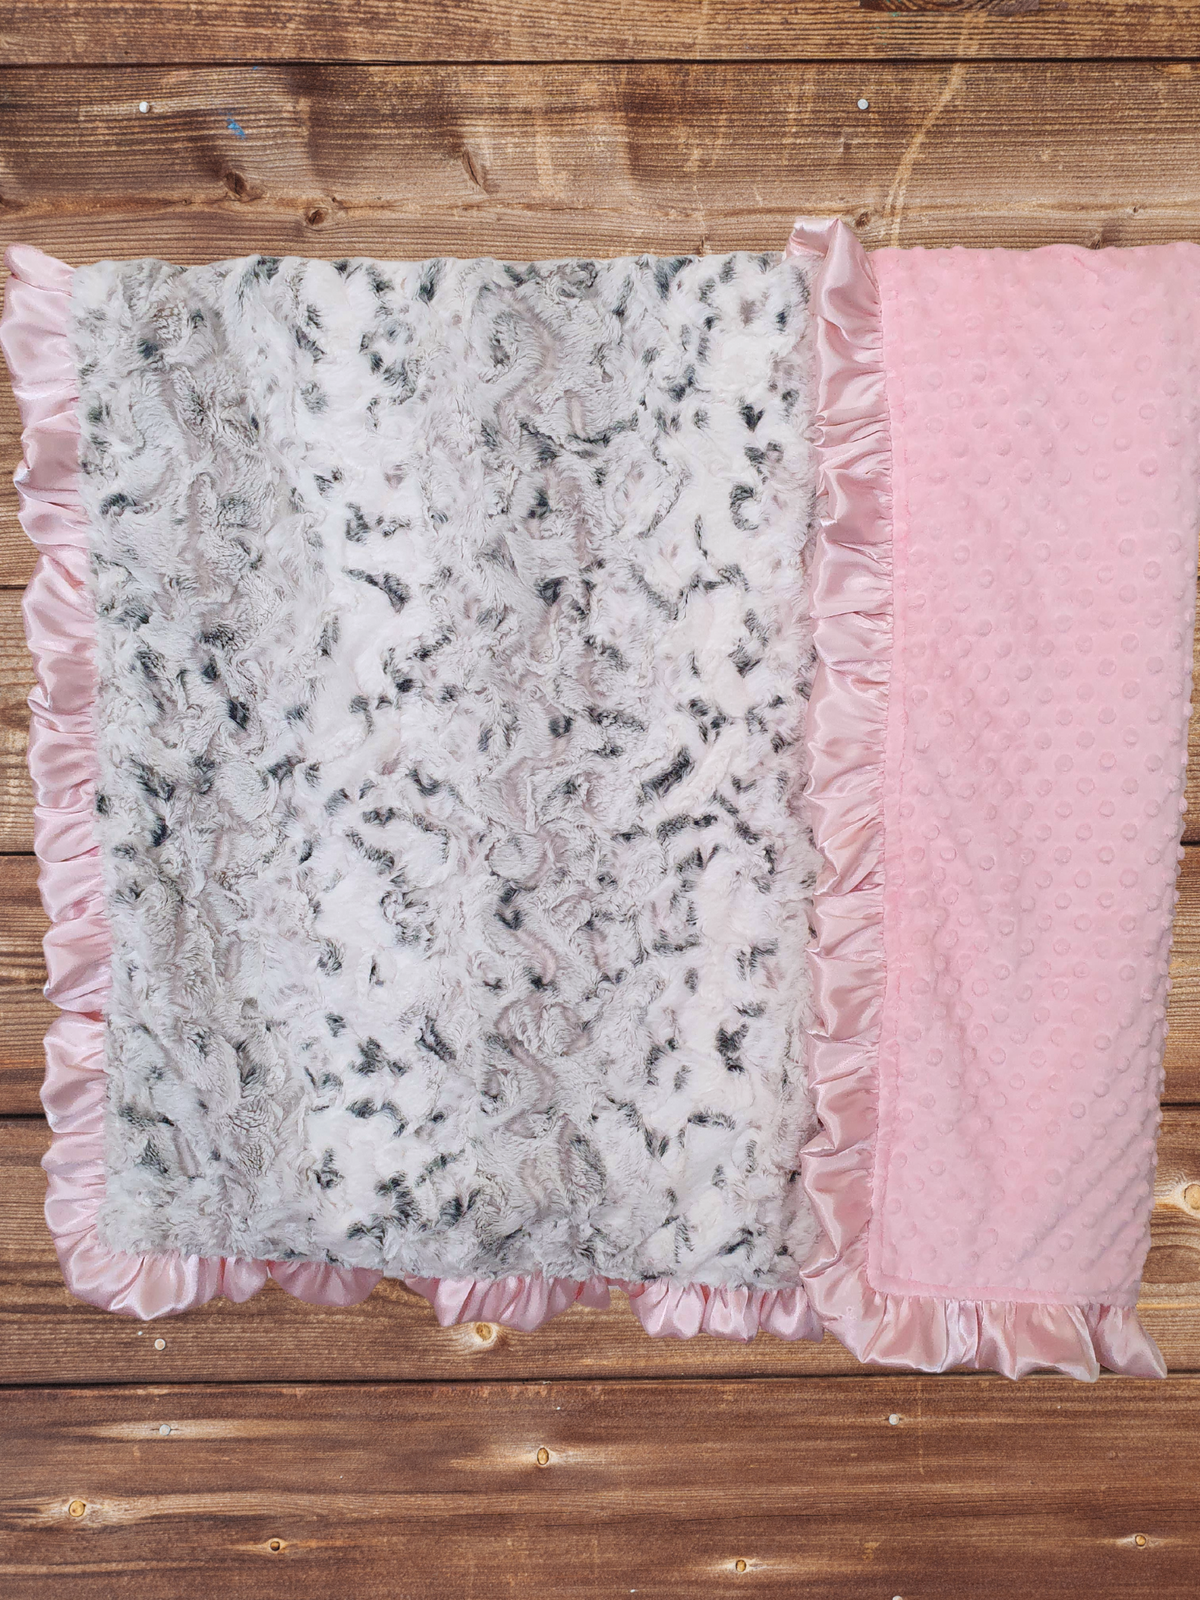 Ruffle Baby Blanket - Snowy Owl Minky and Blush Minky Blanket - DBC Baby Bedding Co 